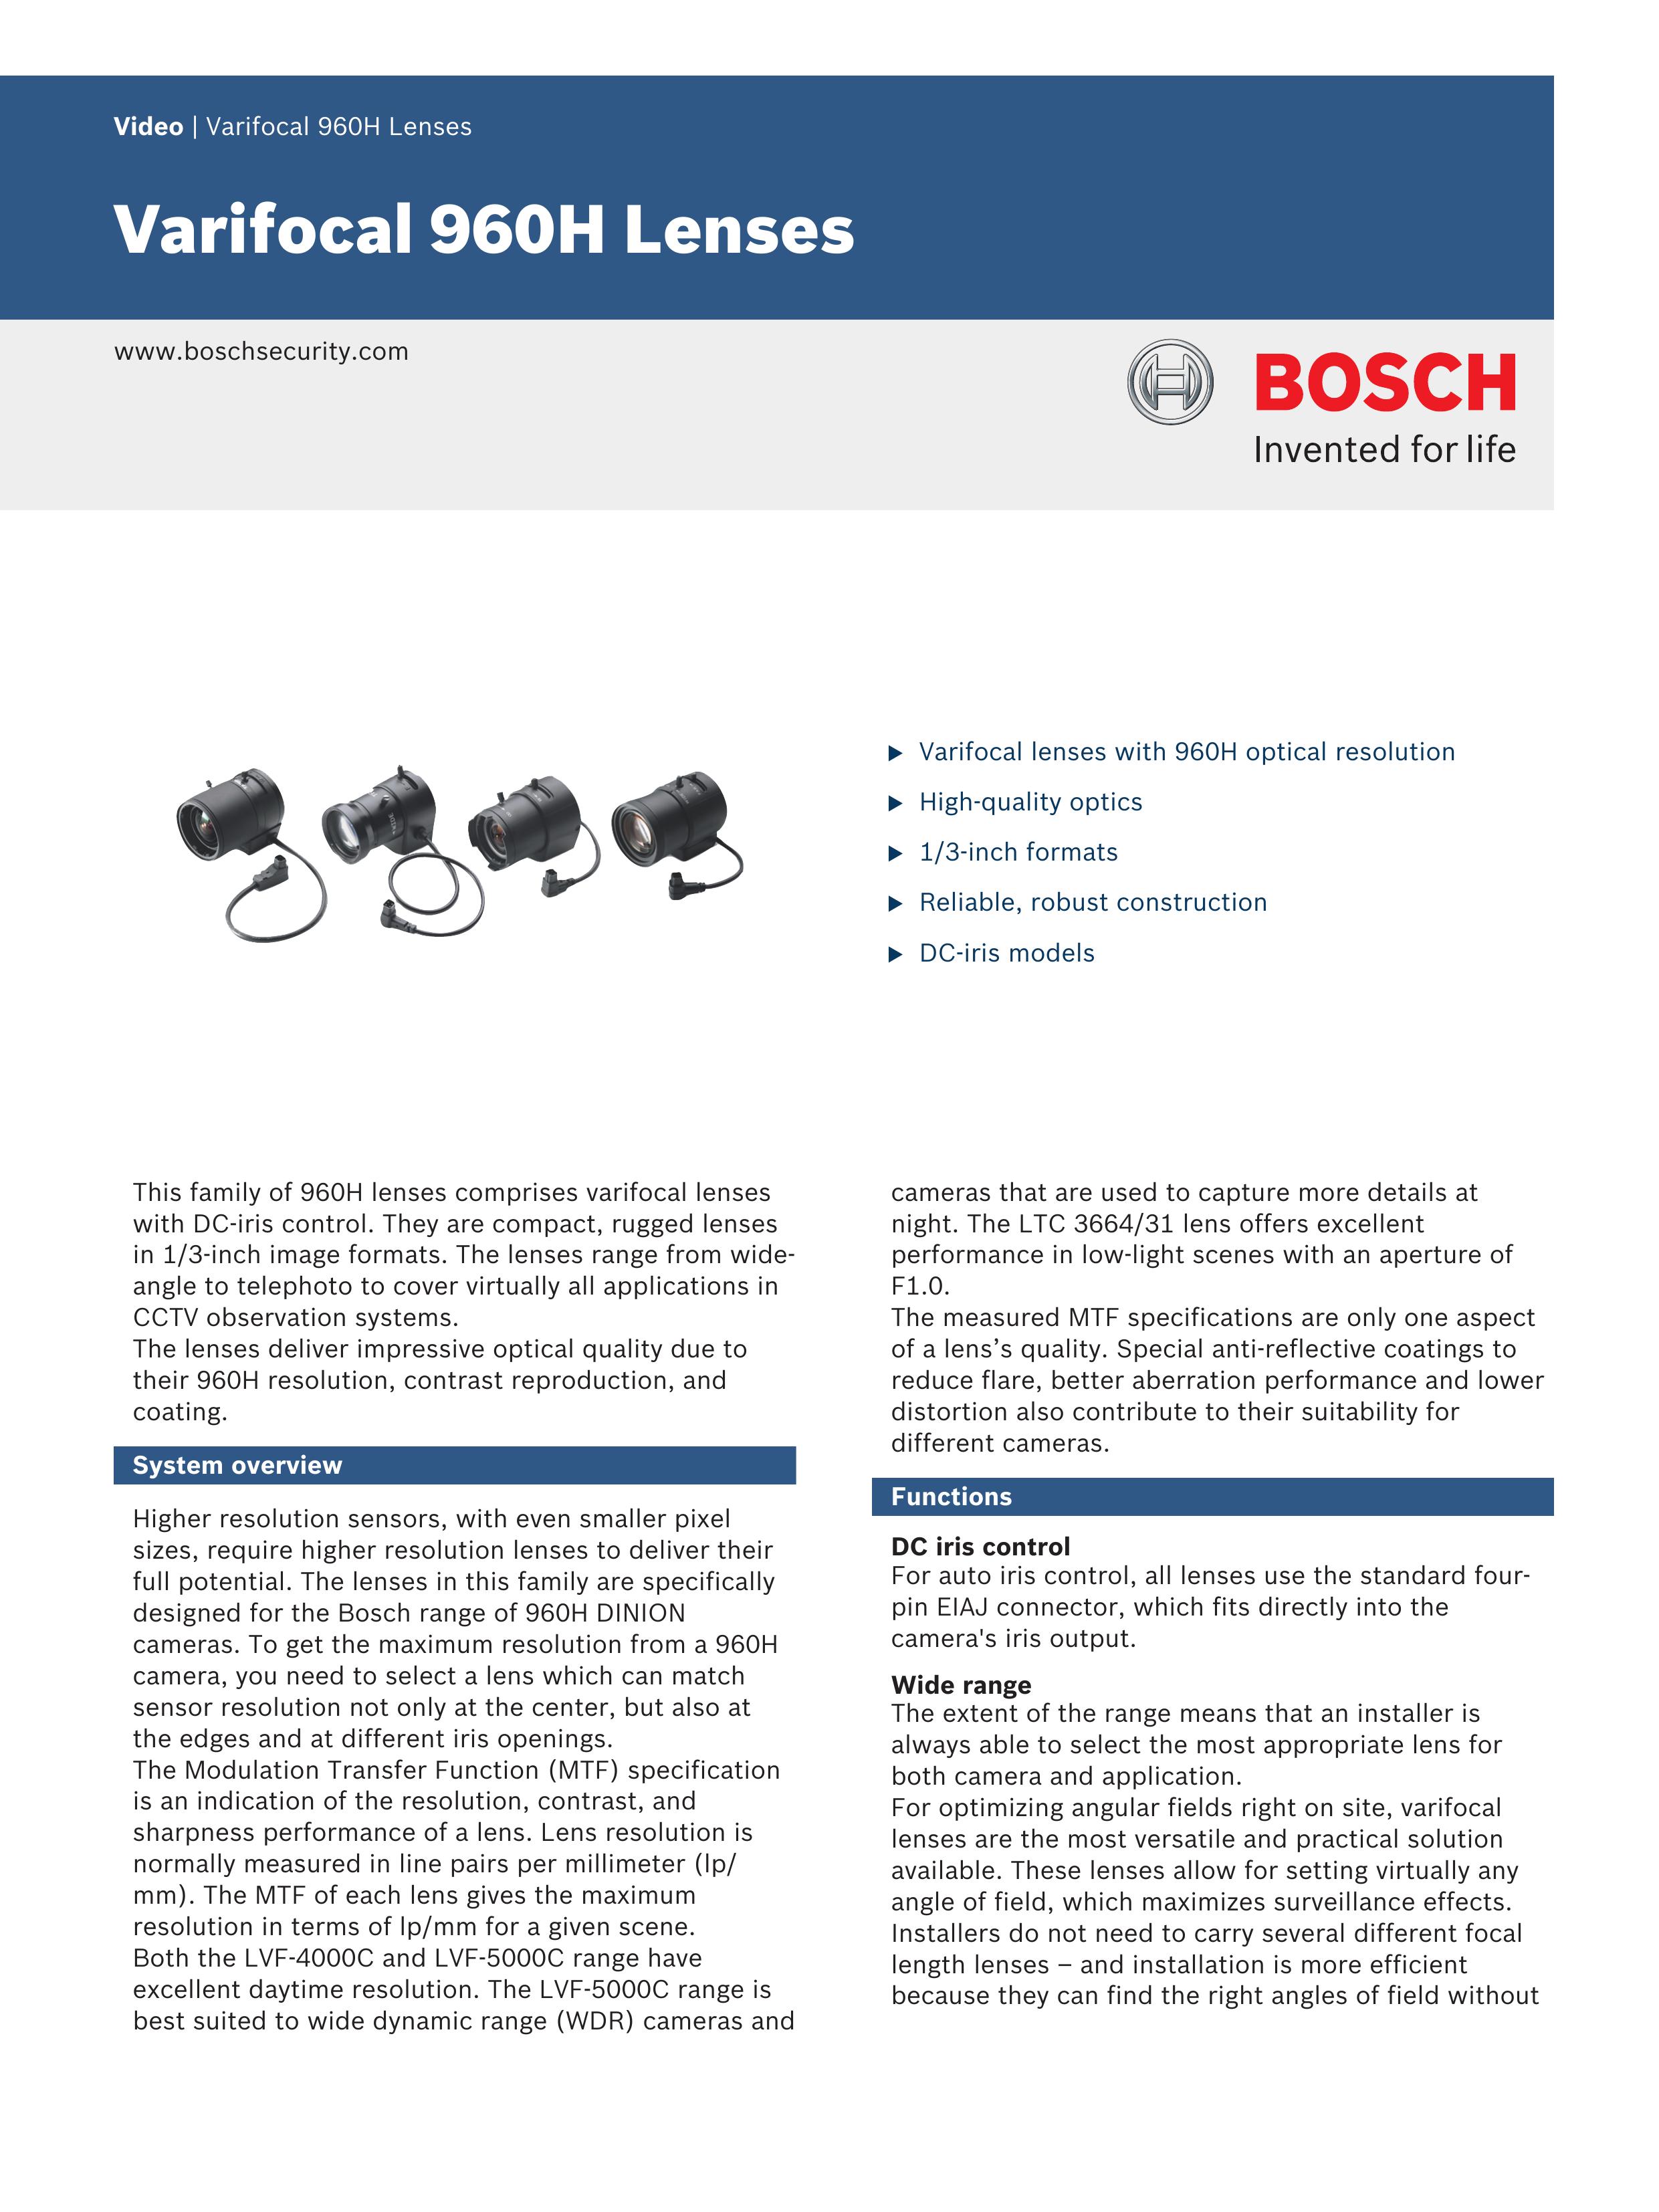 Bosch Appliances 960H Camera Lens User Manual